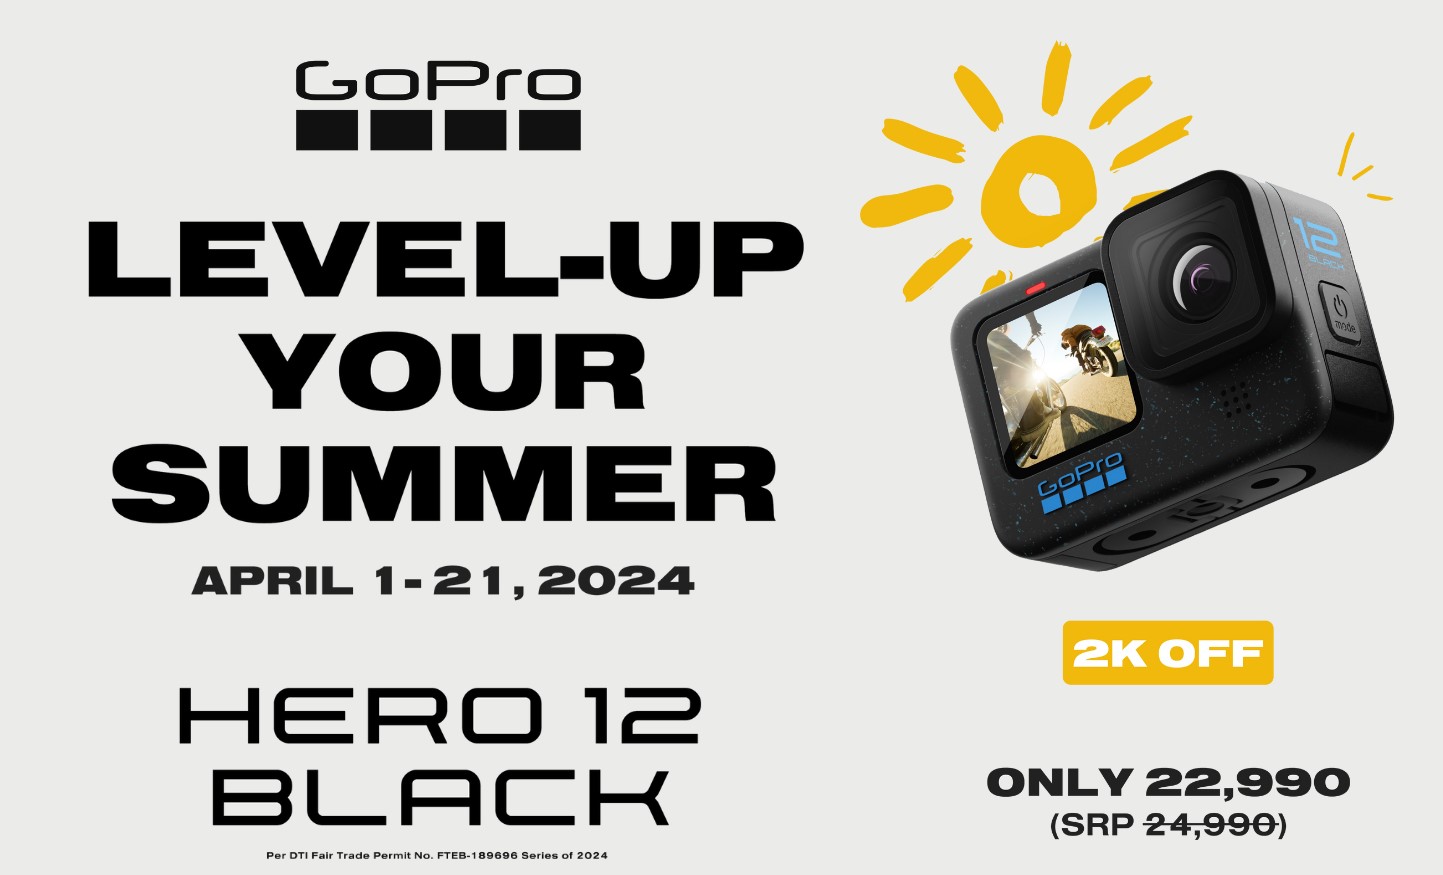 Gopro Level up your Summer Promo